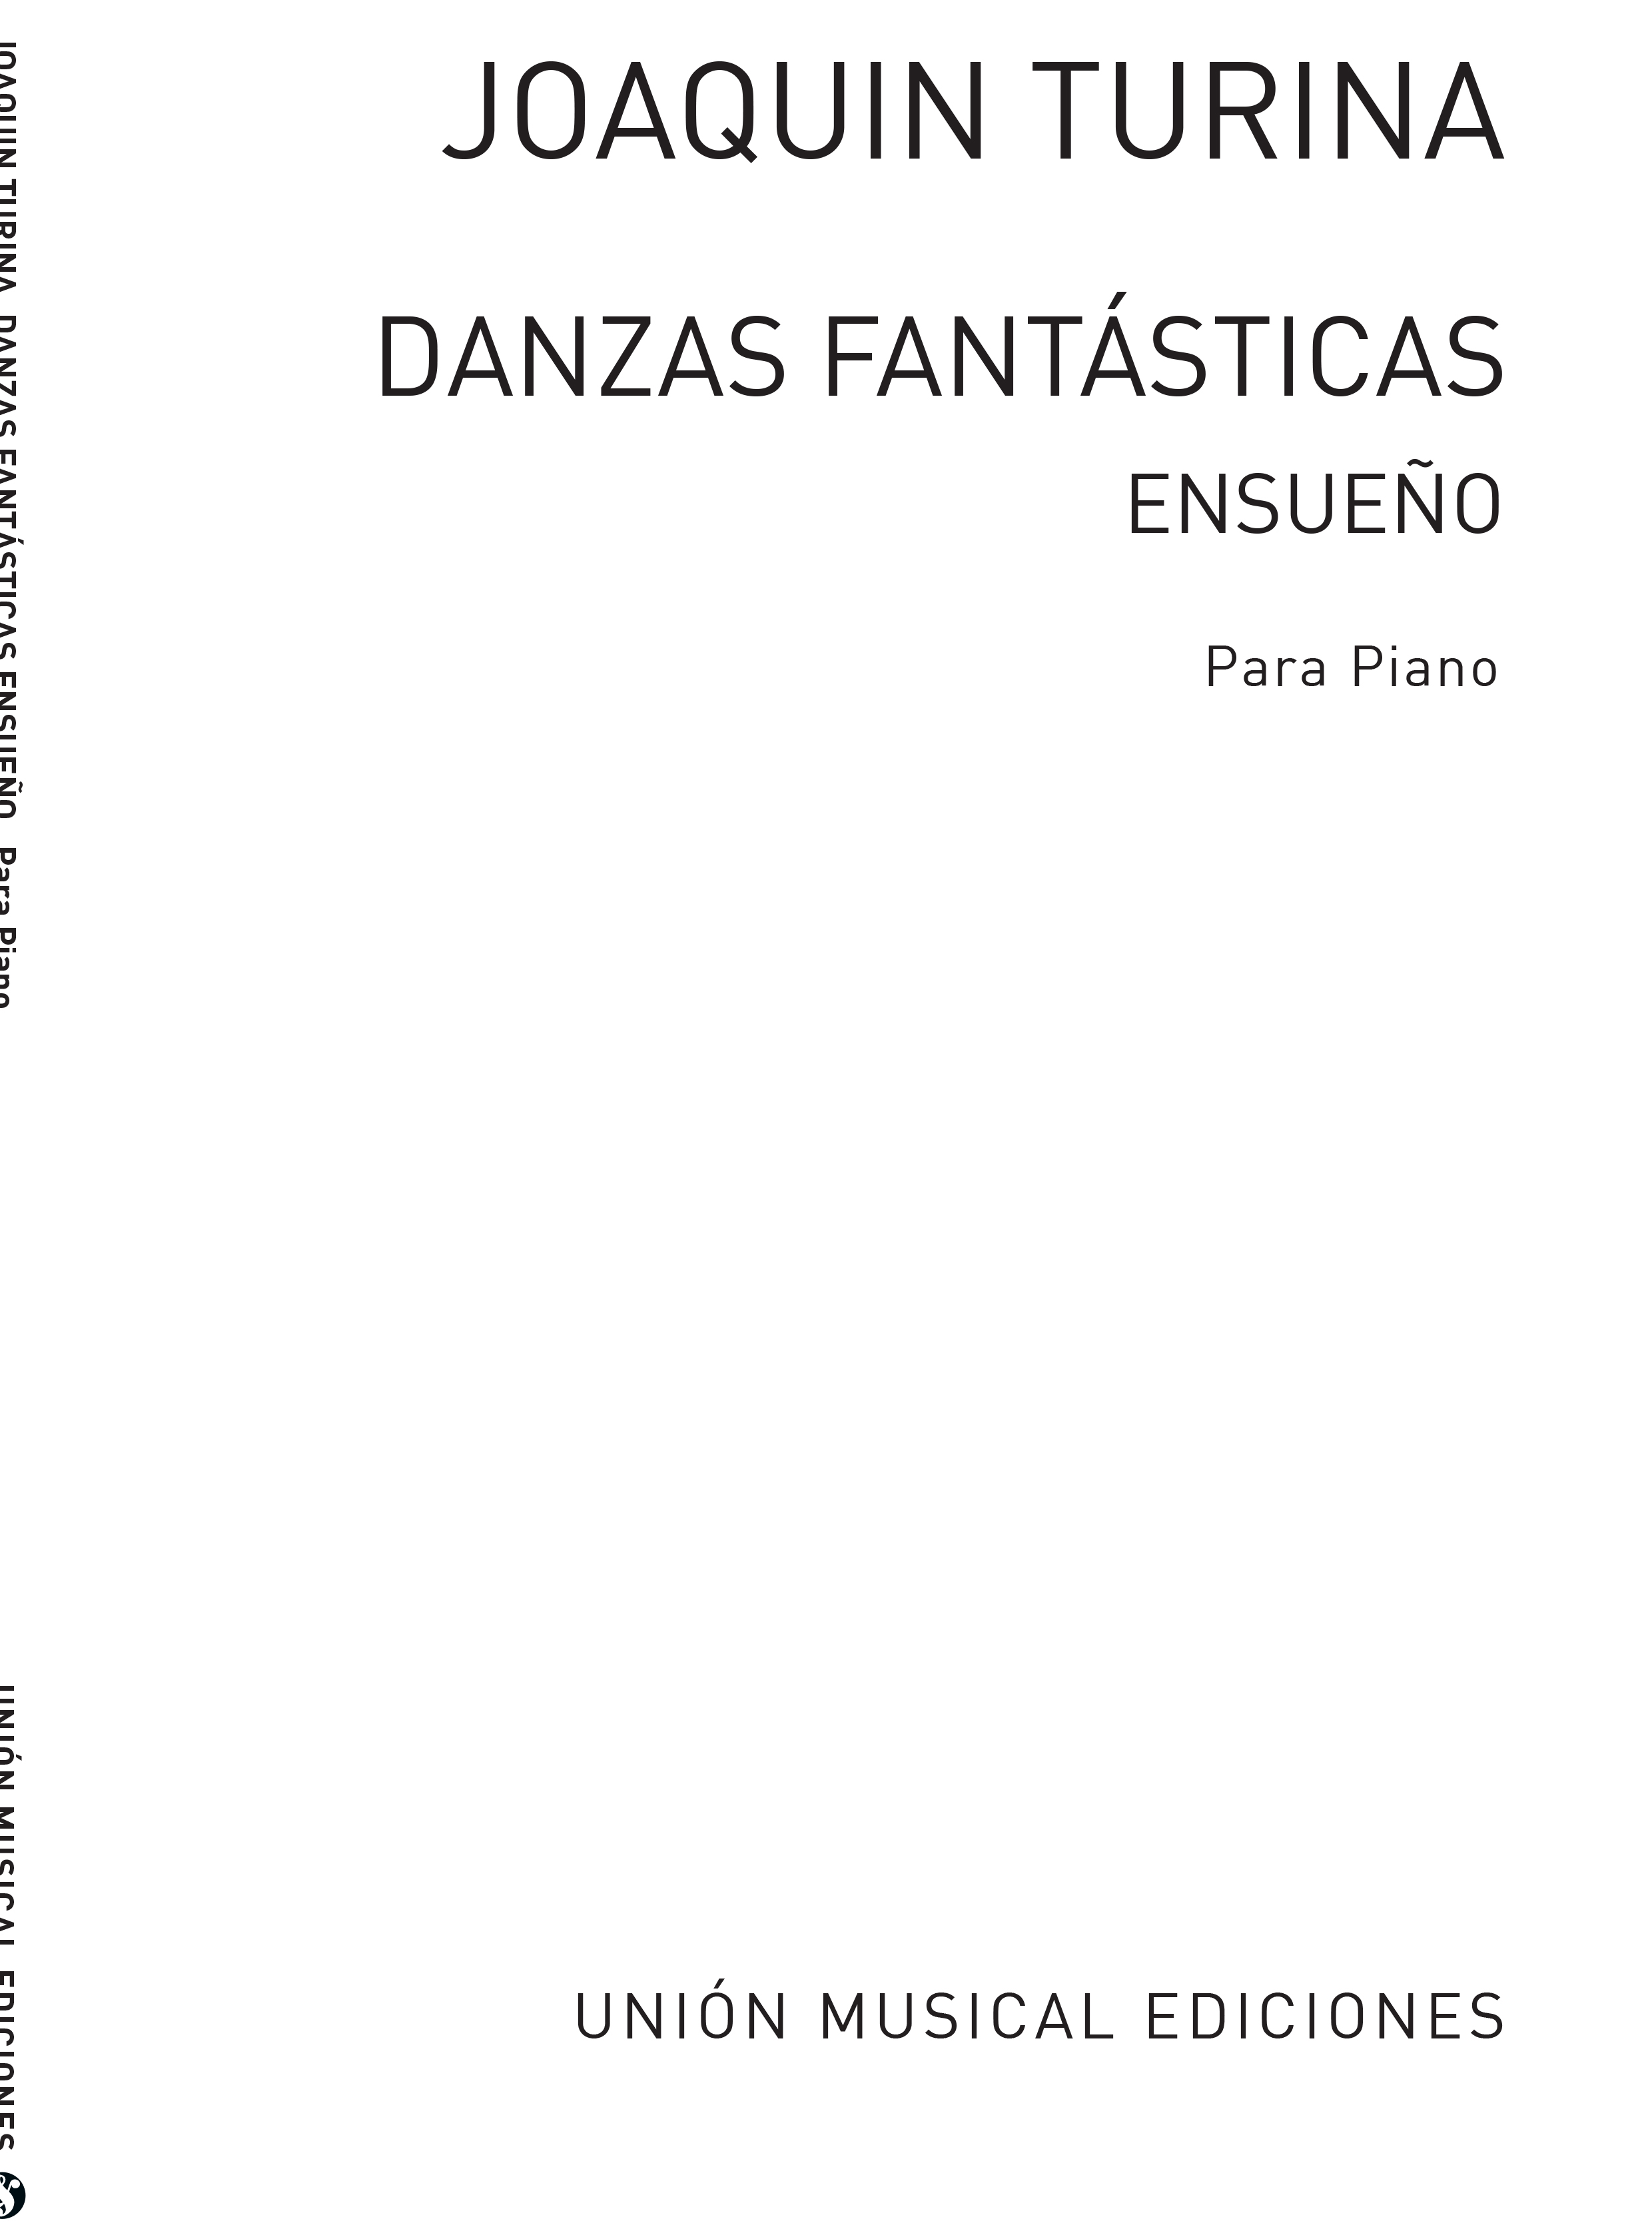 Joaqun Turina: Ensueno'  Danzas Fantasticas: Piano: Instrumental Album